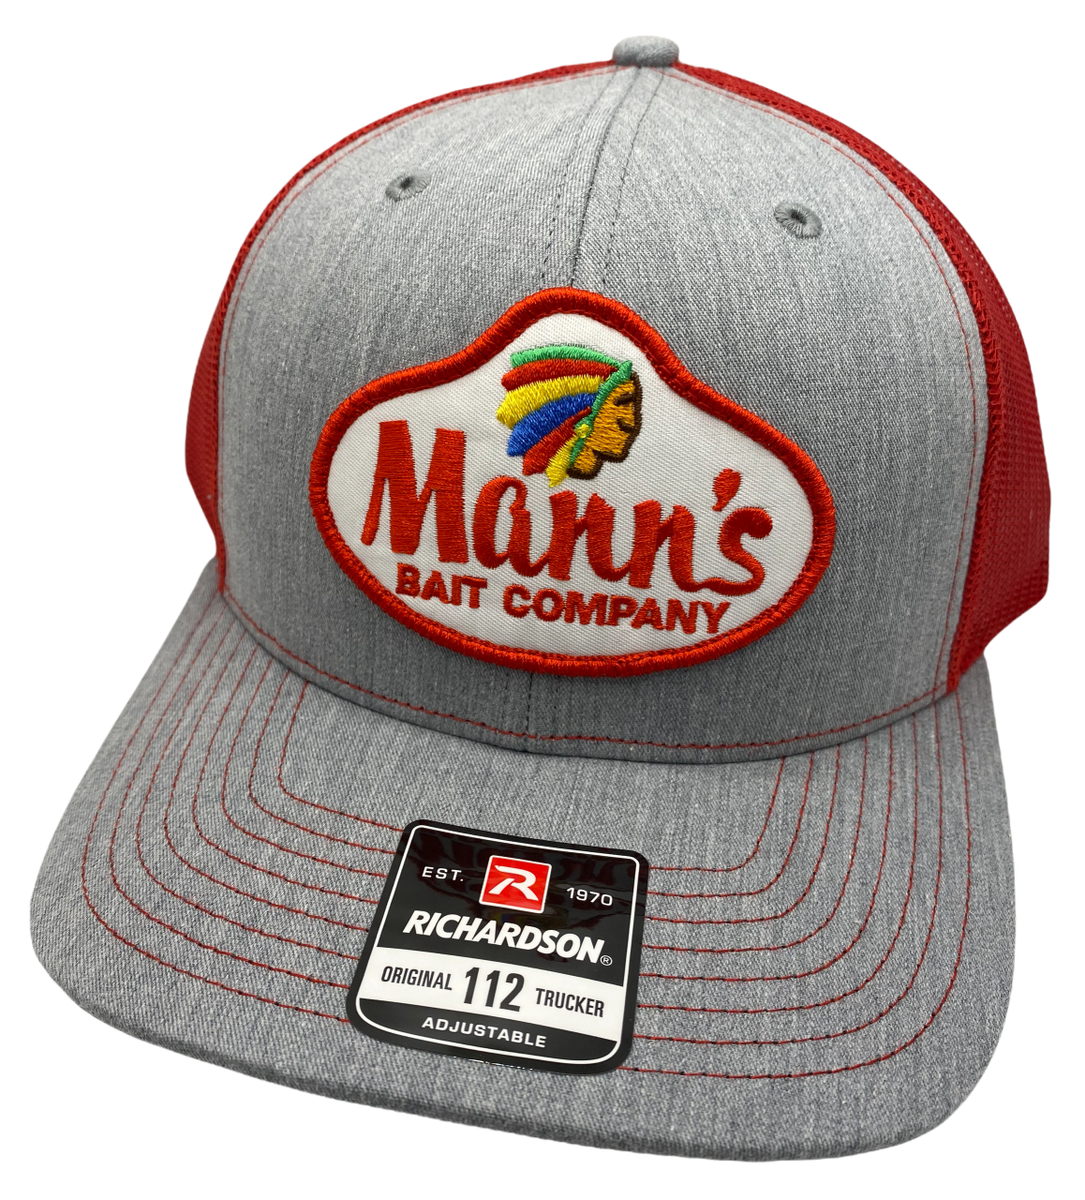 Mann's Bait Company Hat